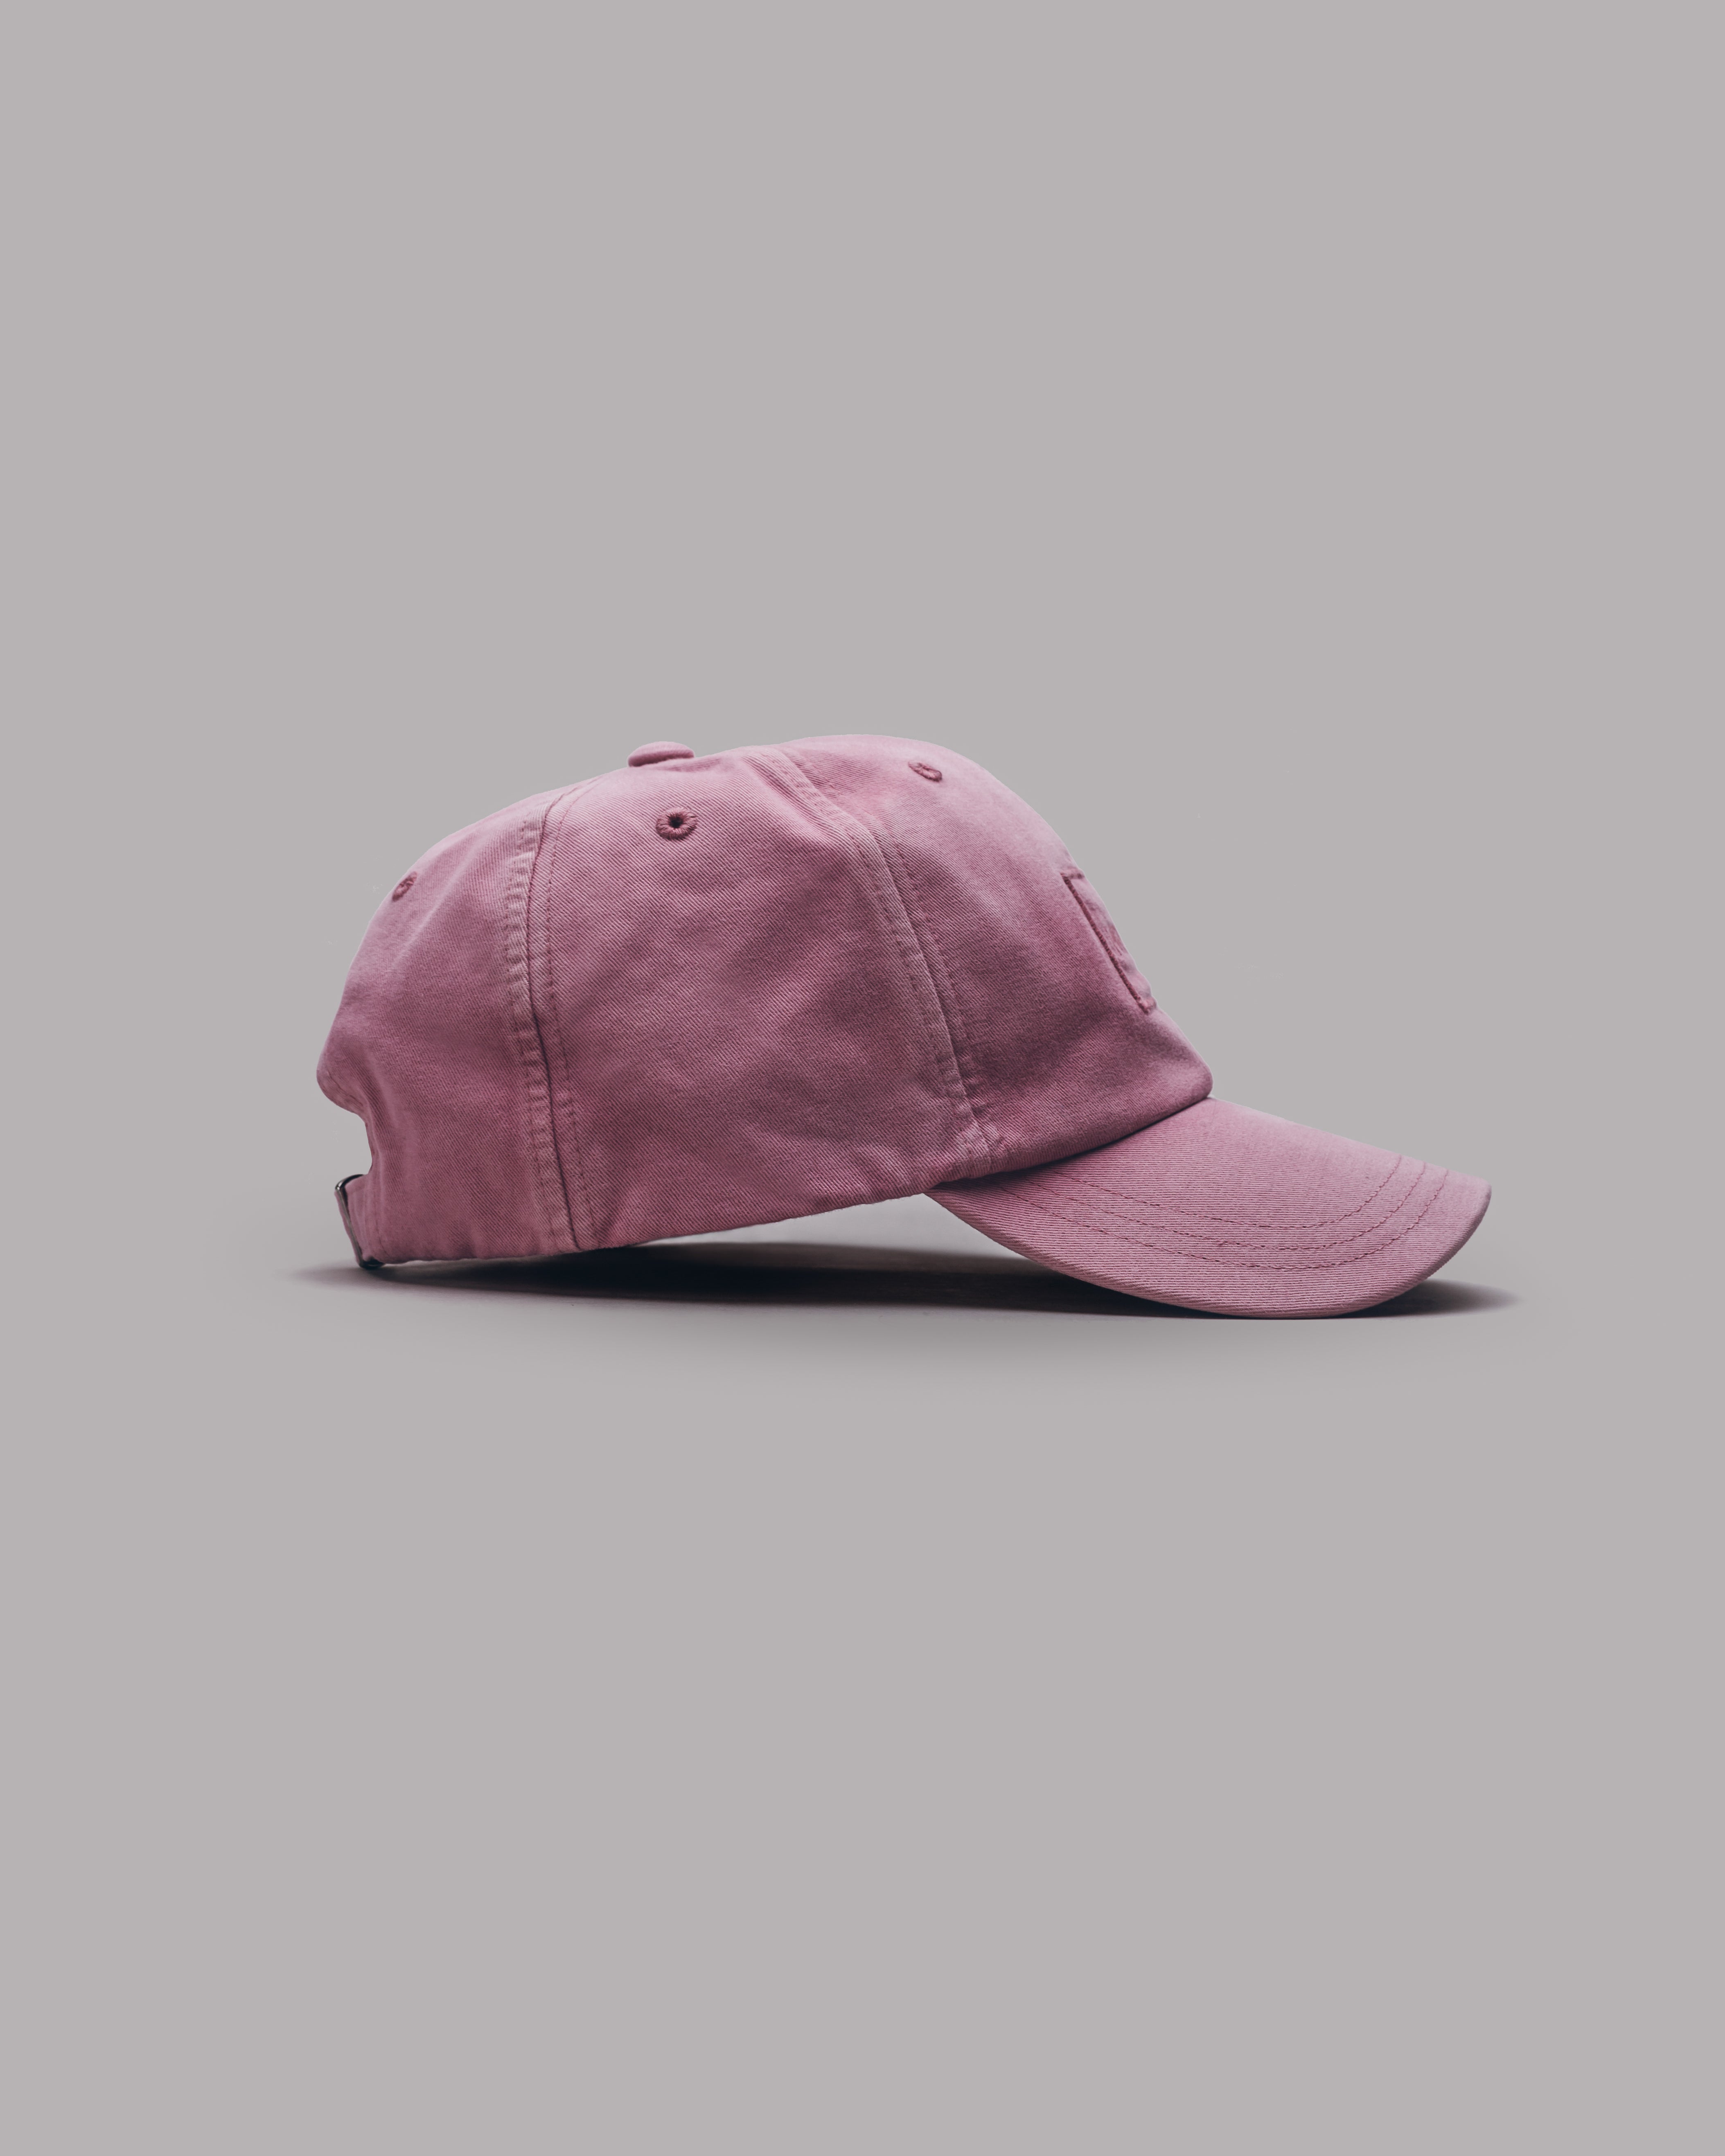 The Pink Base Cap